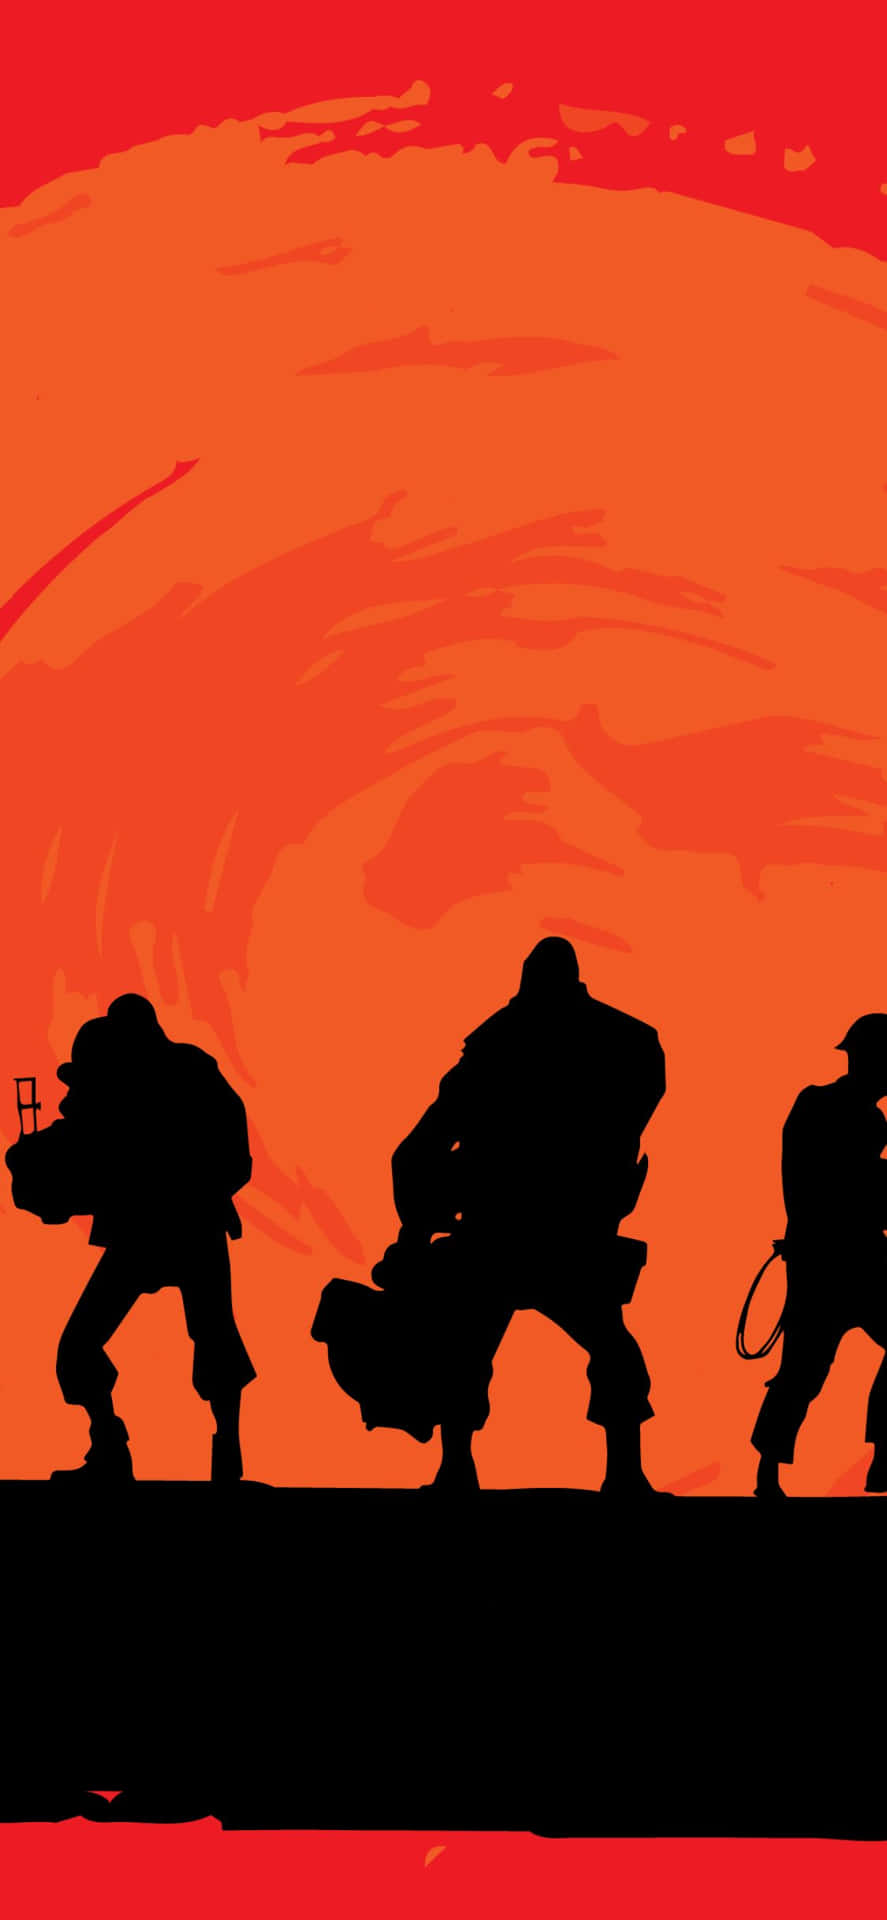 Iphonexs Team Fortress 2 Silhouette Illustration Hintergrund